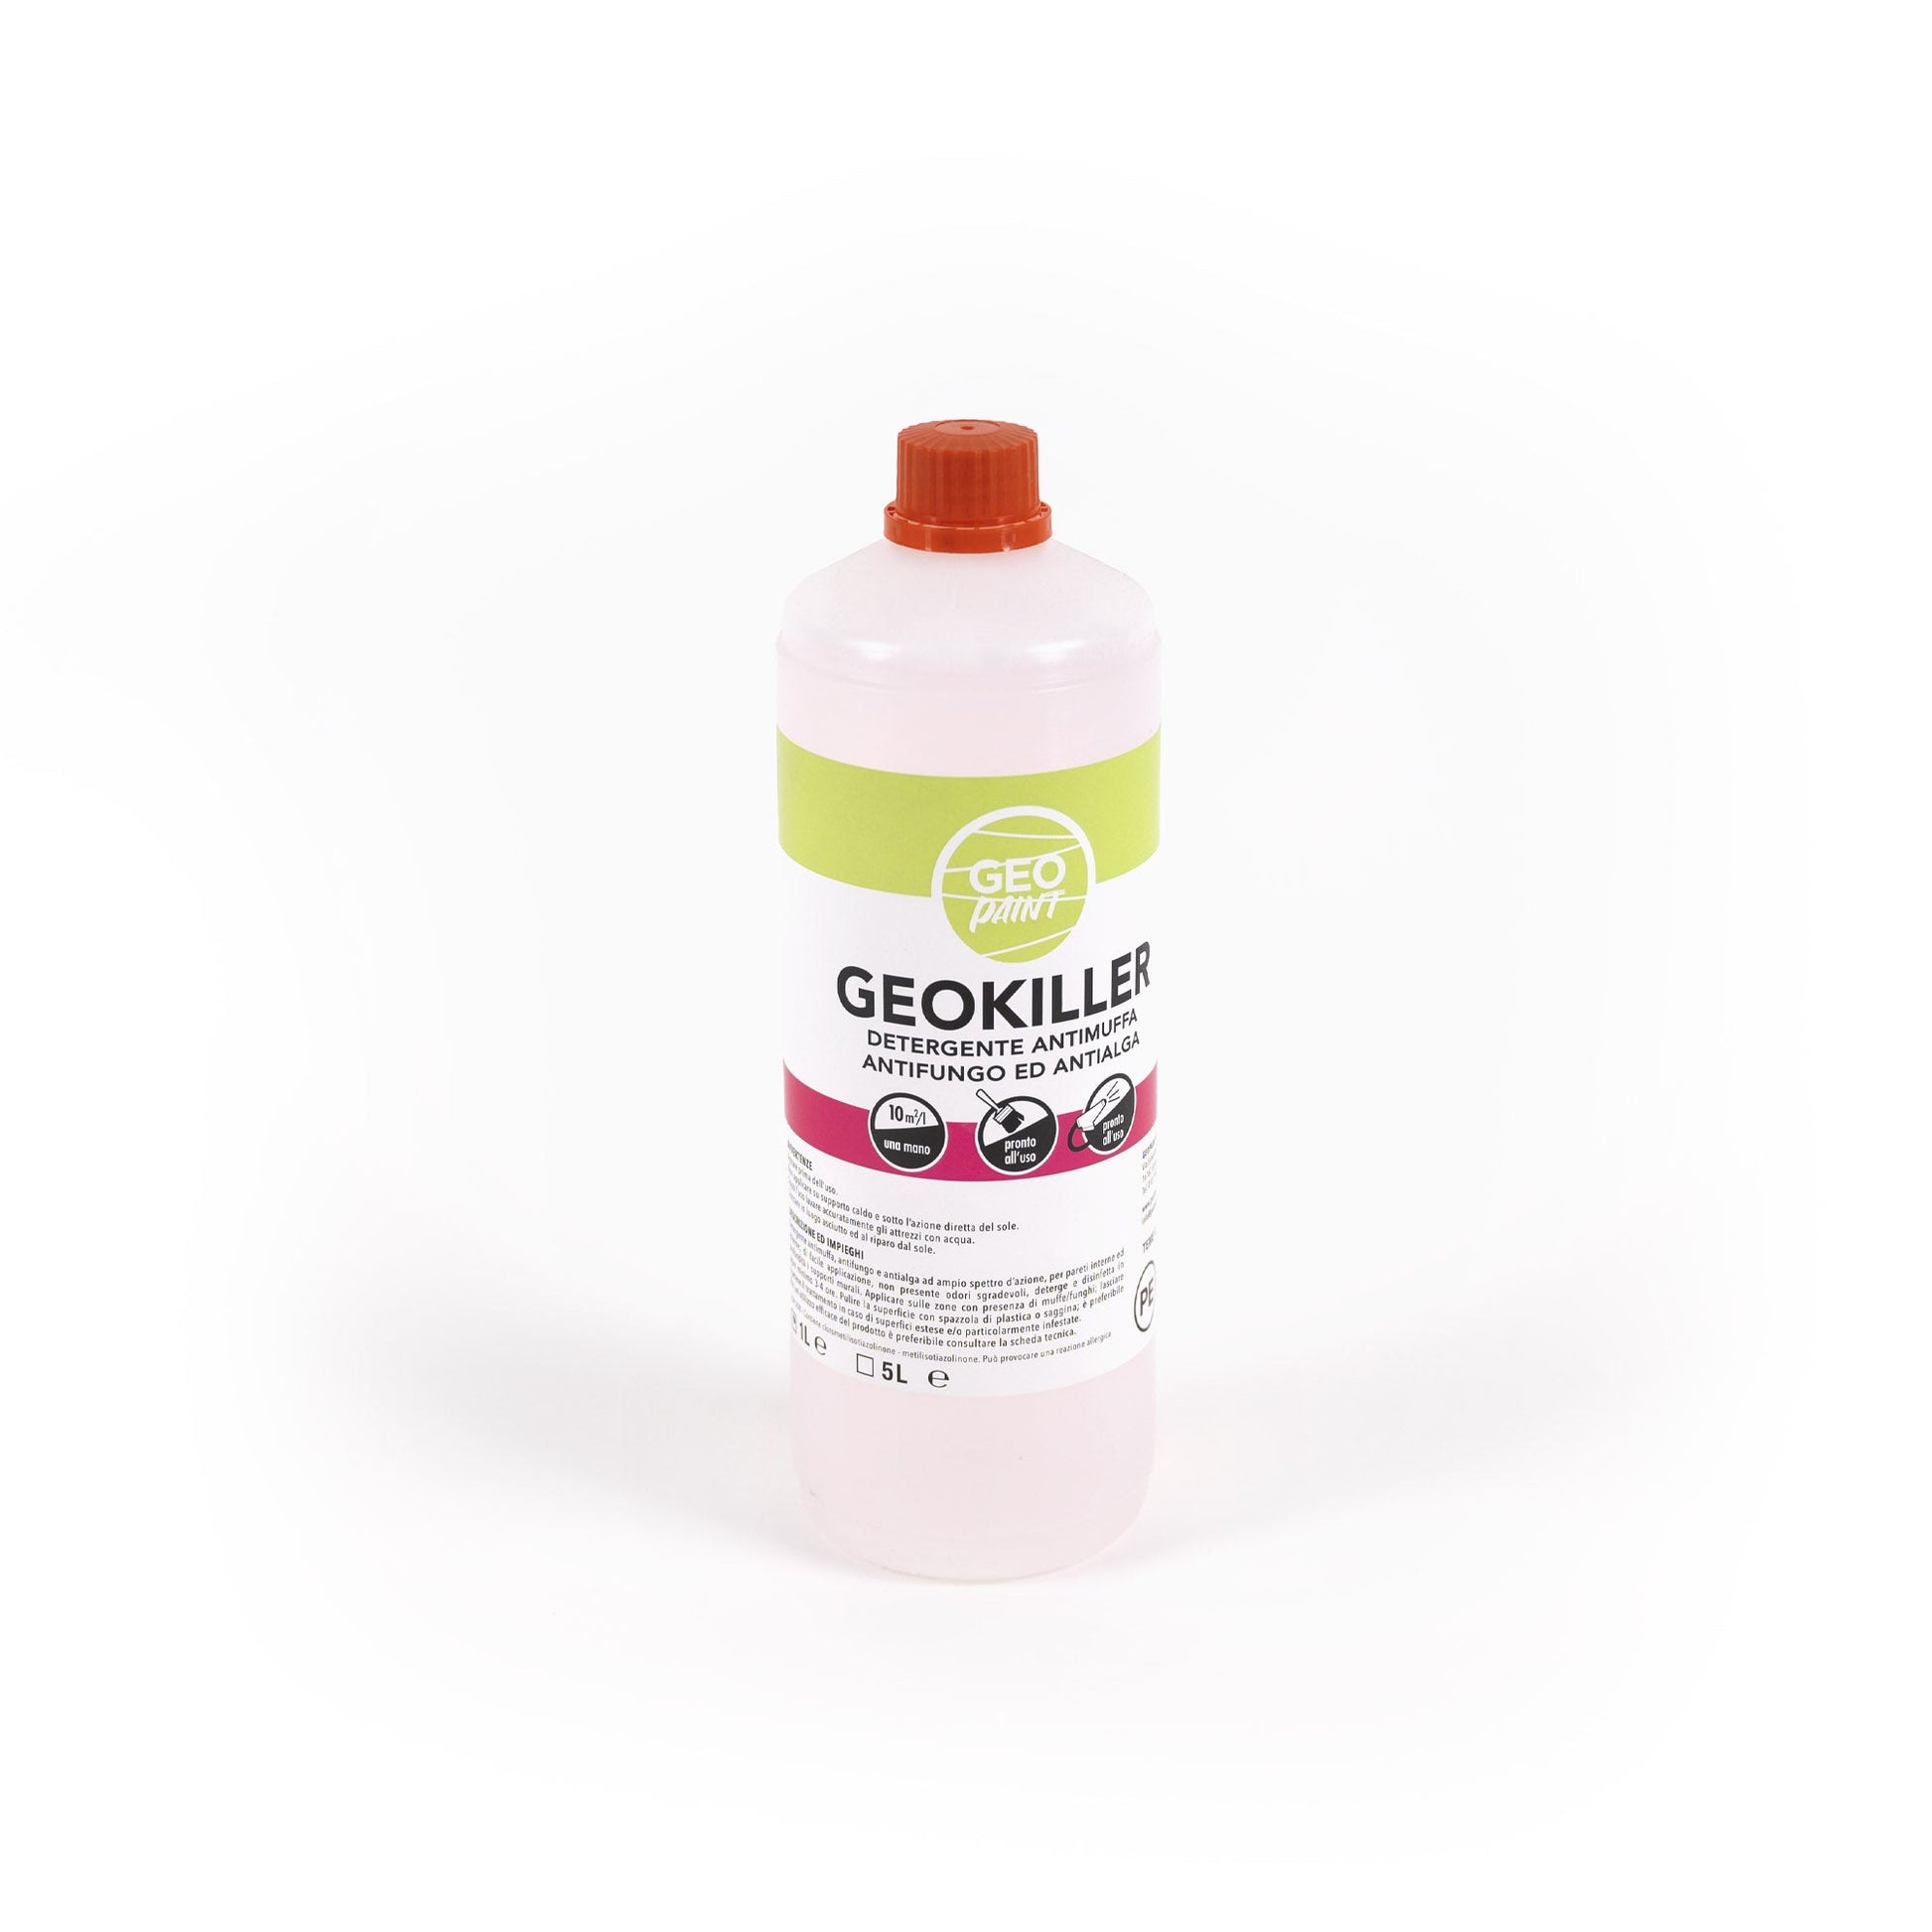 Geokiller-Fissativo-antimuffa-consolidante-colorificio-GeoPaint